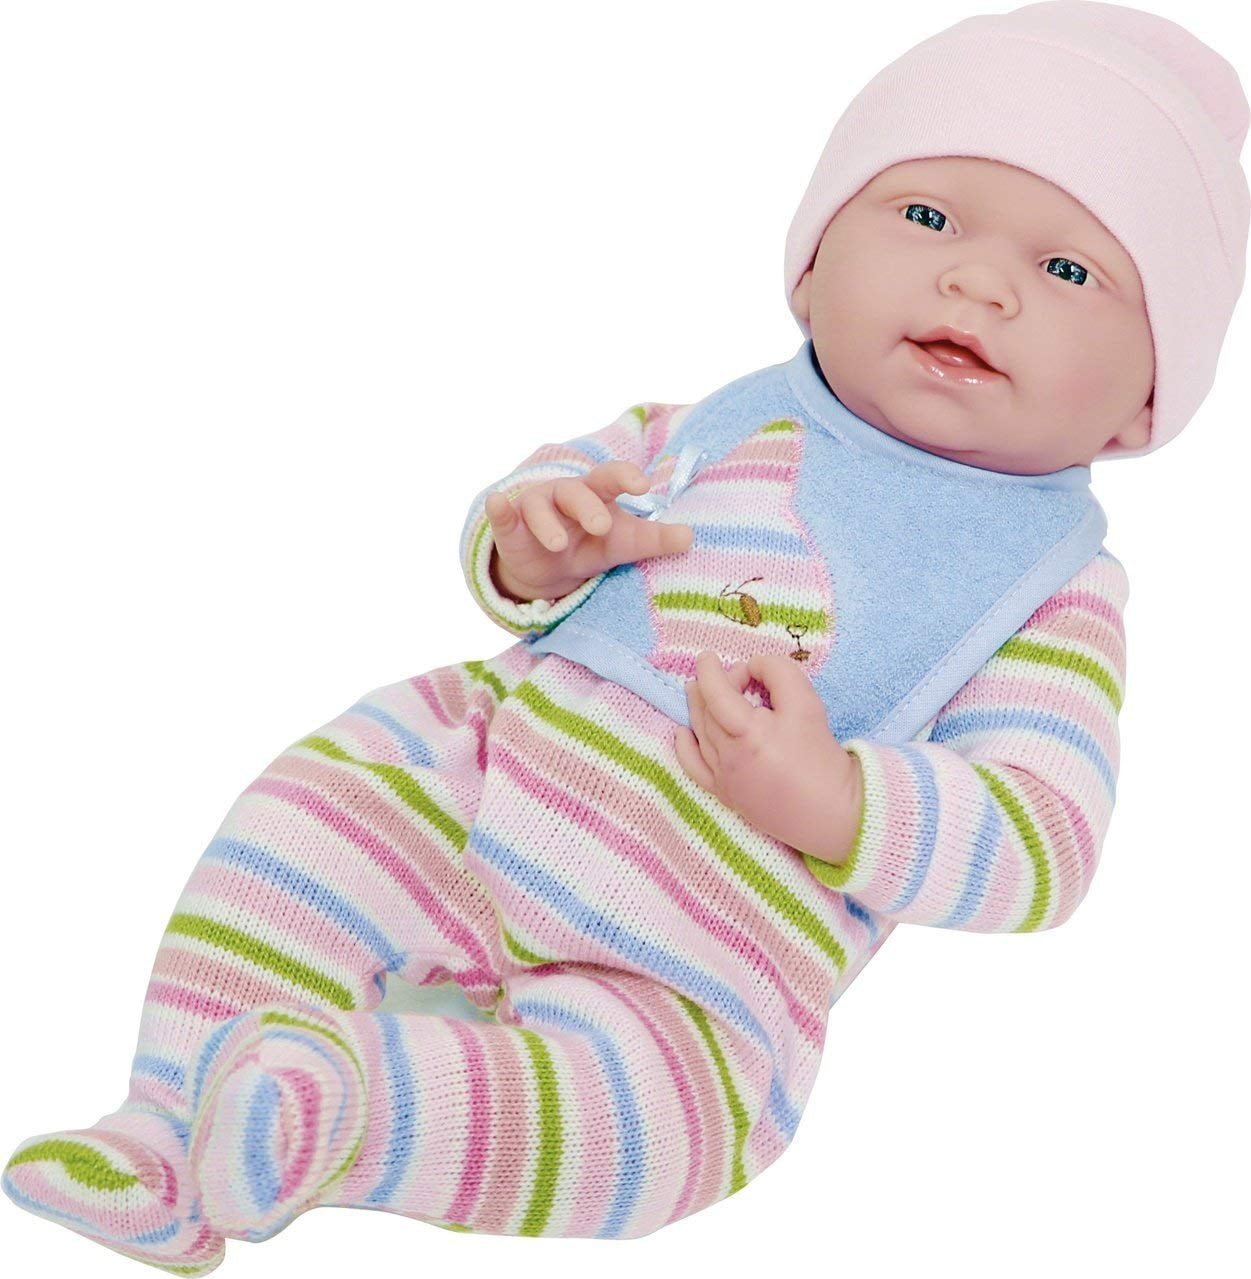 BERENGUER 18500 LA NEWBORN 14" REAL BOY-FIRST DAY-Baby Doll NEW Blue BNIB 